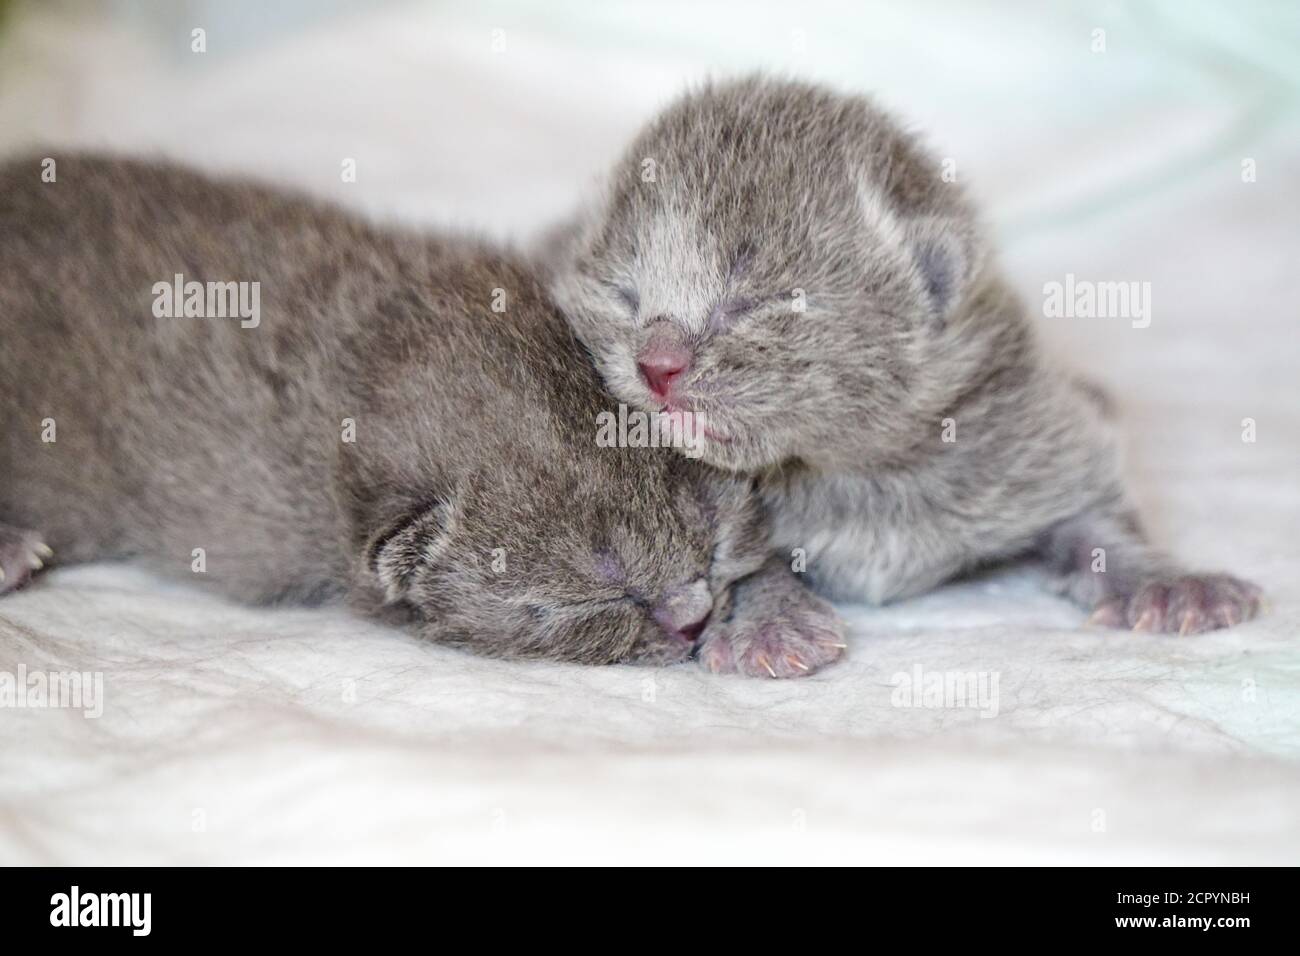 New born scottish fold kittens on white background close up view Stock Photo